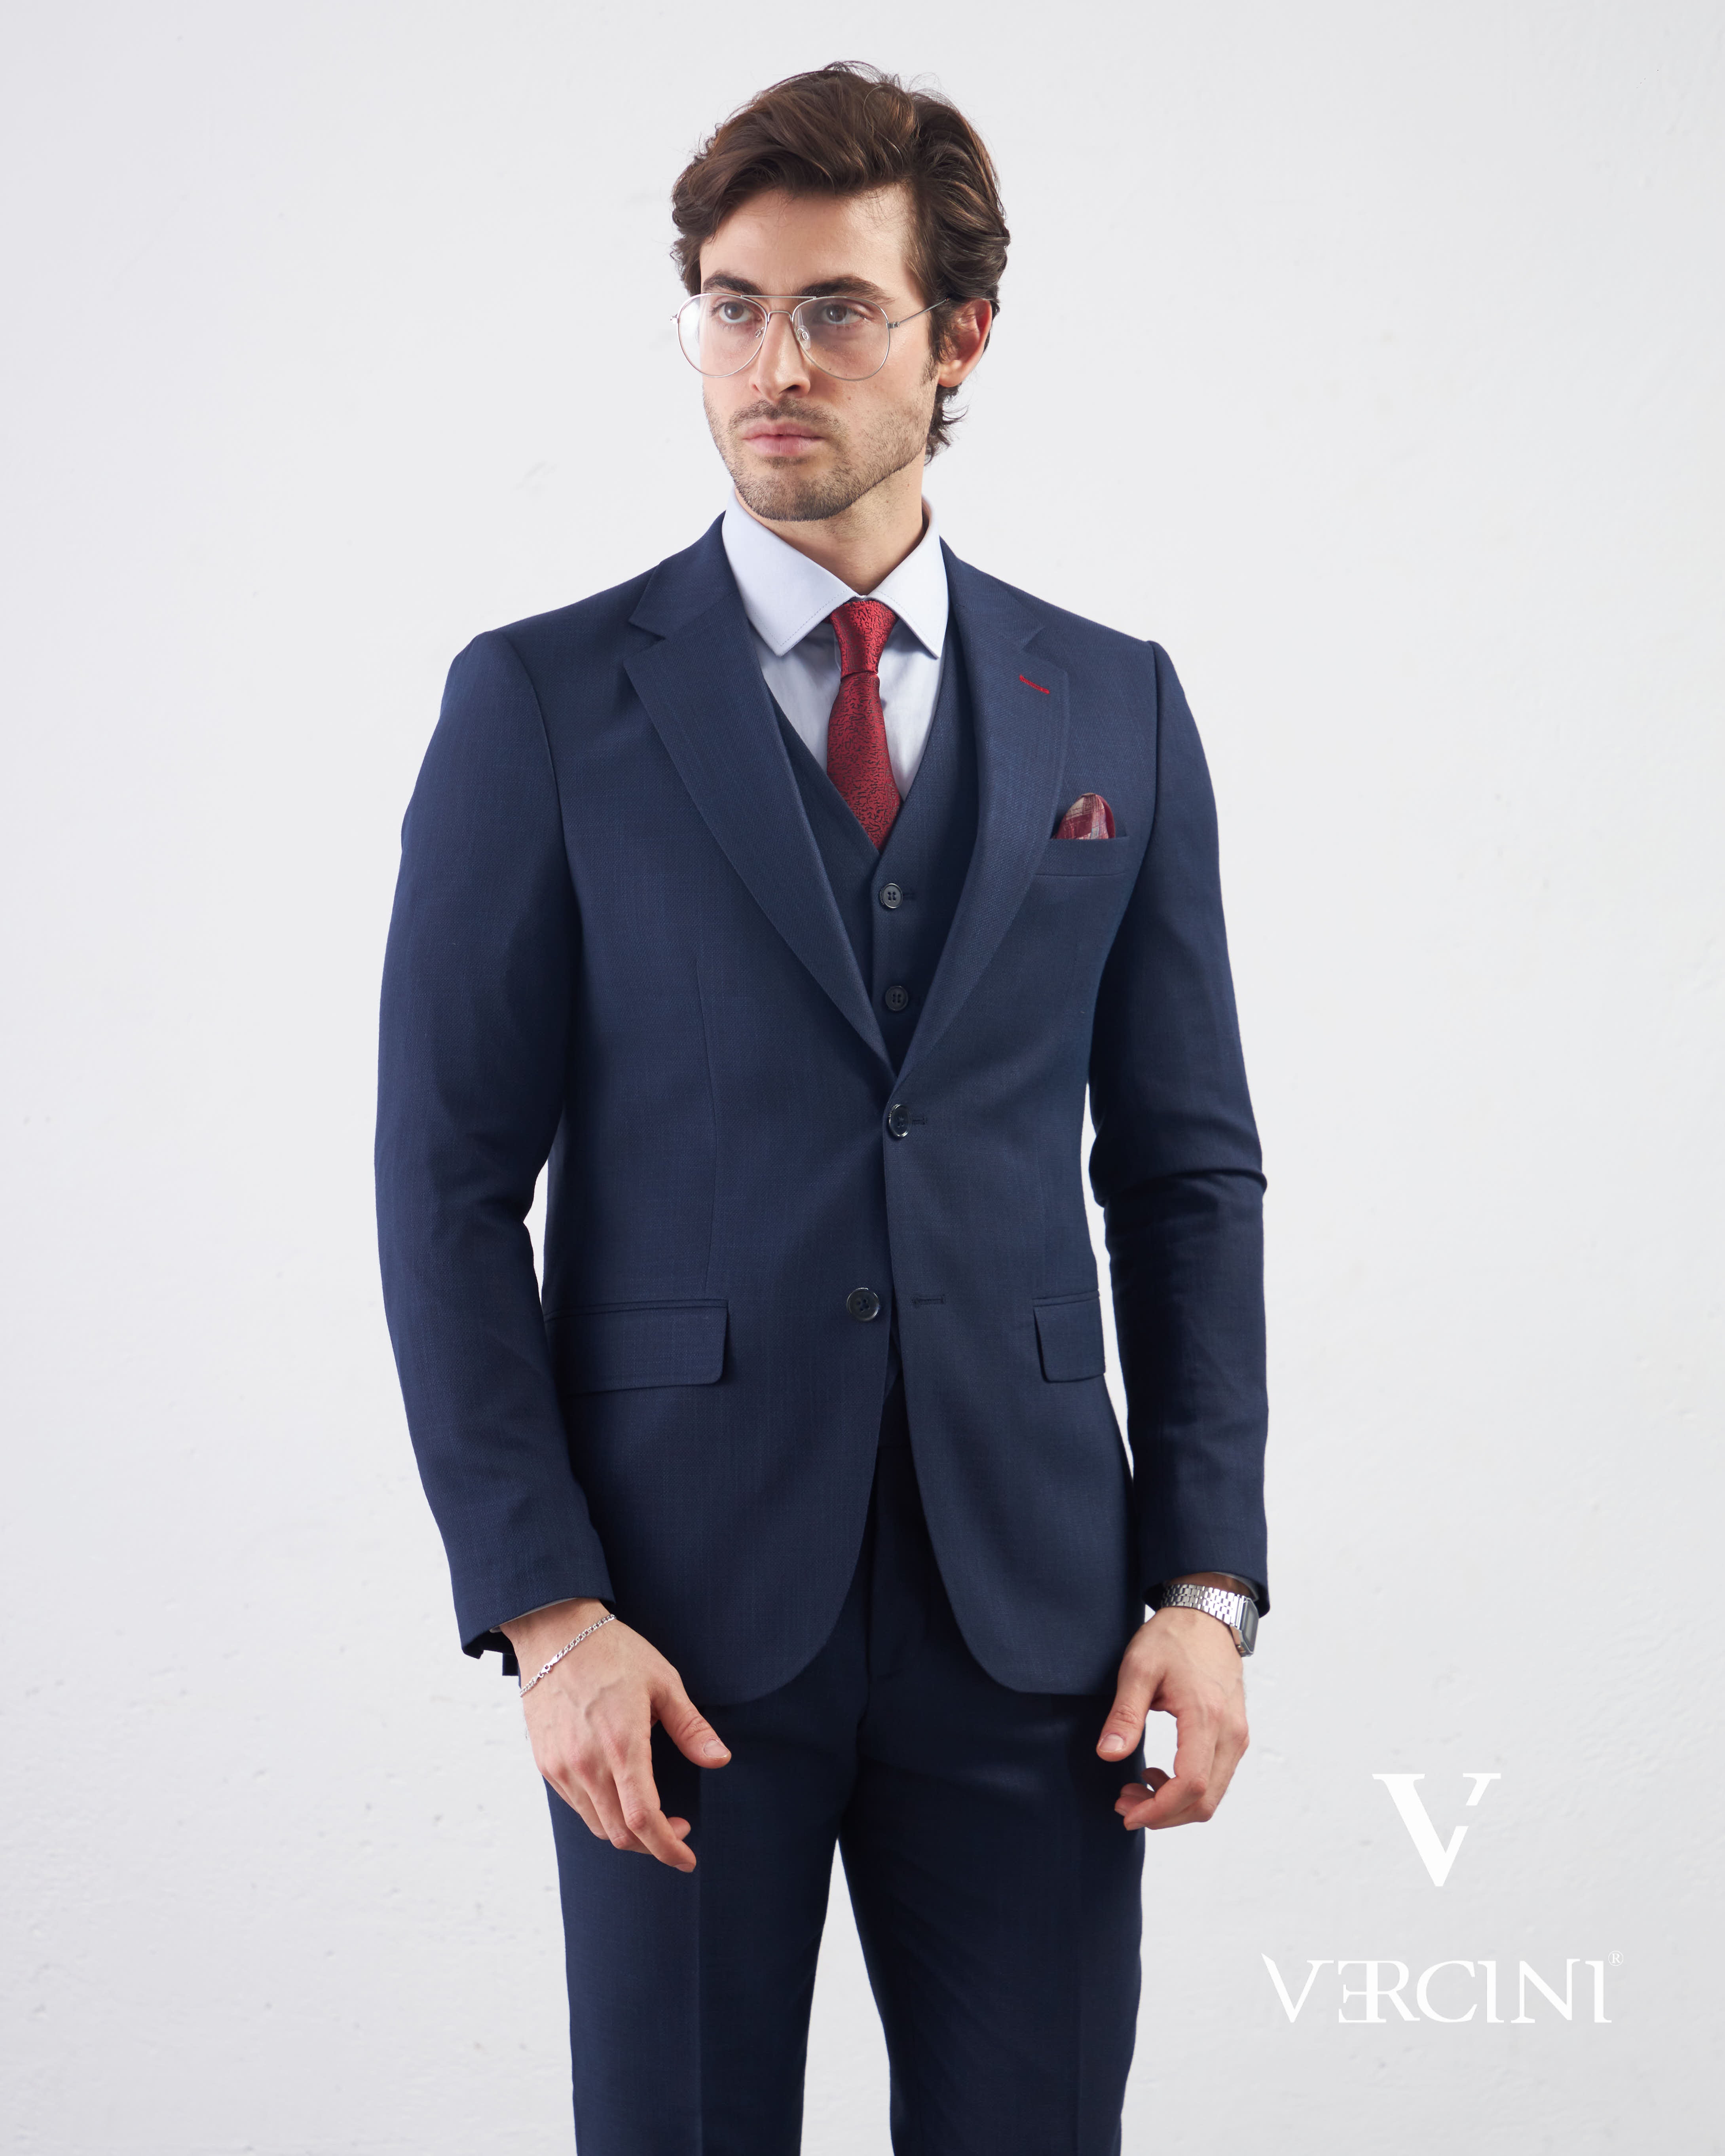 Colorichiari three-piece suit - Blue